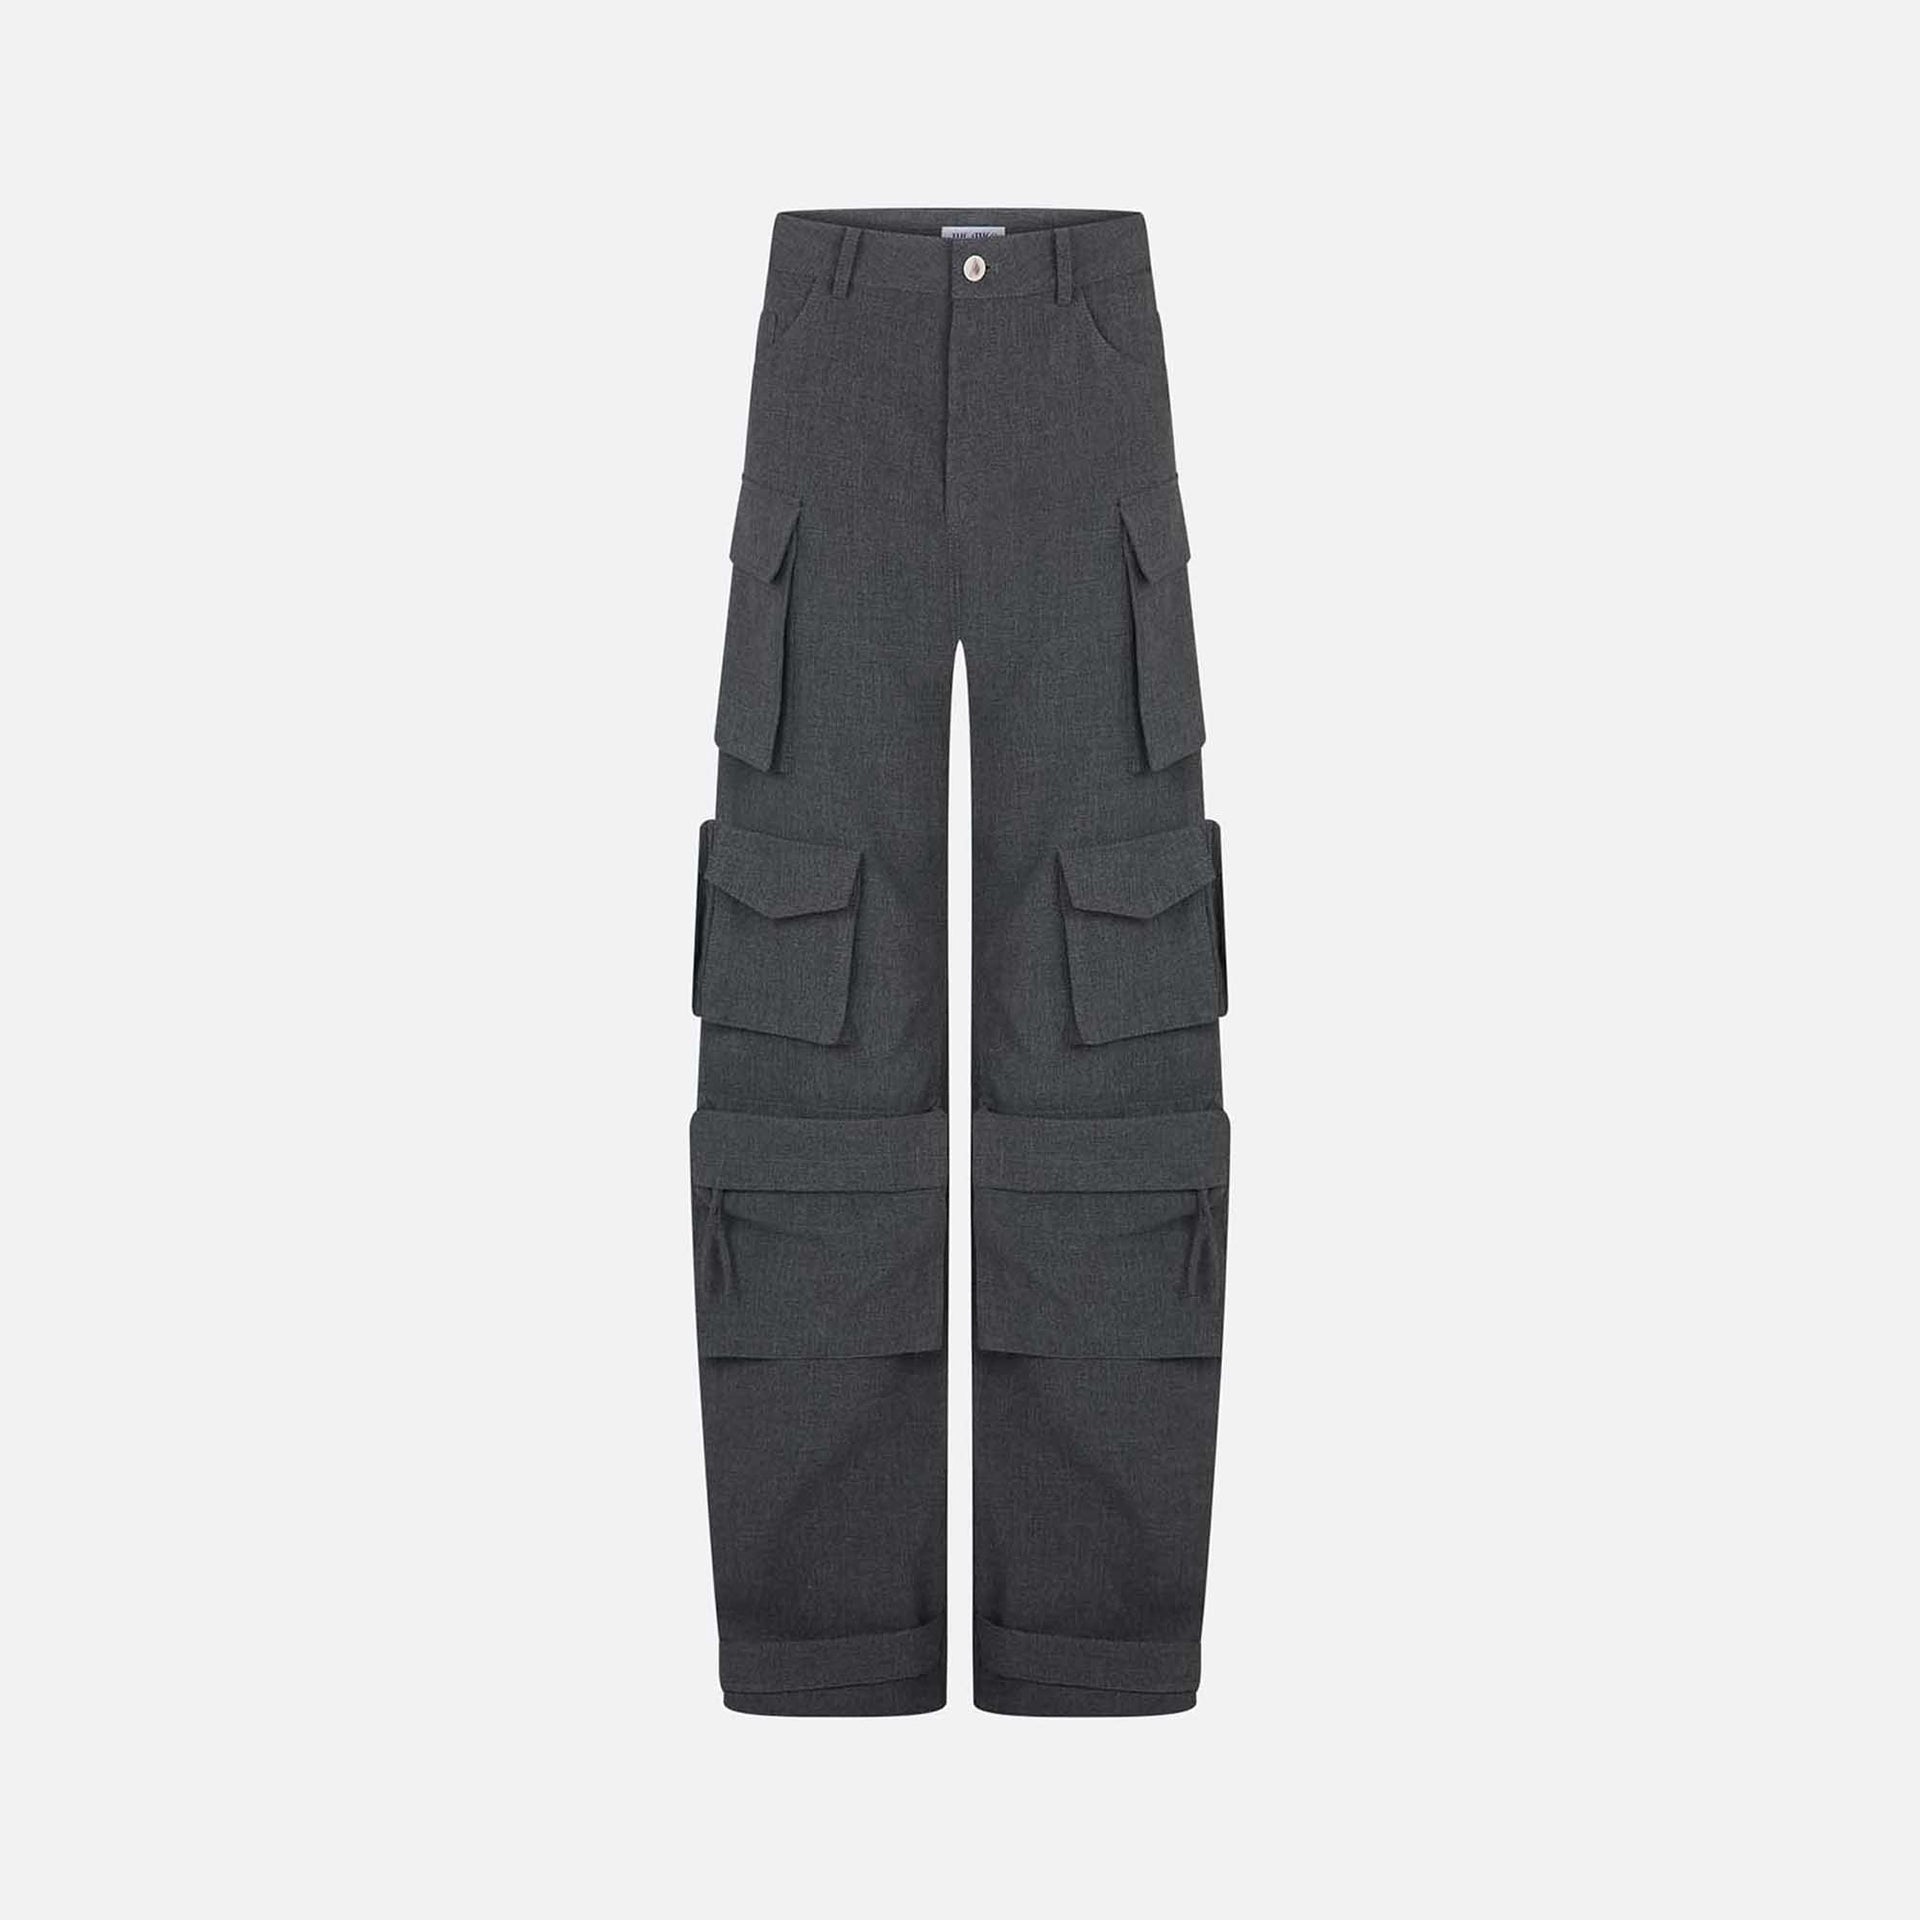 The Attico Pantaloni Lunghi Pant - Dark Grey